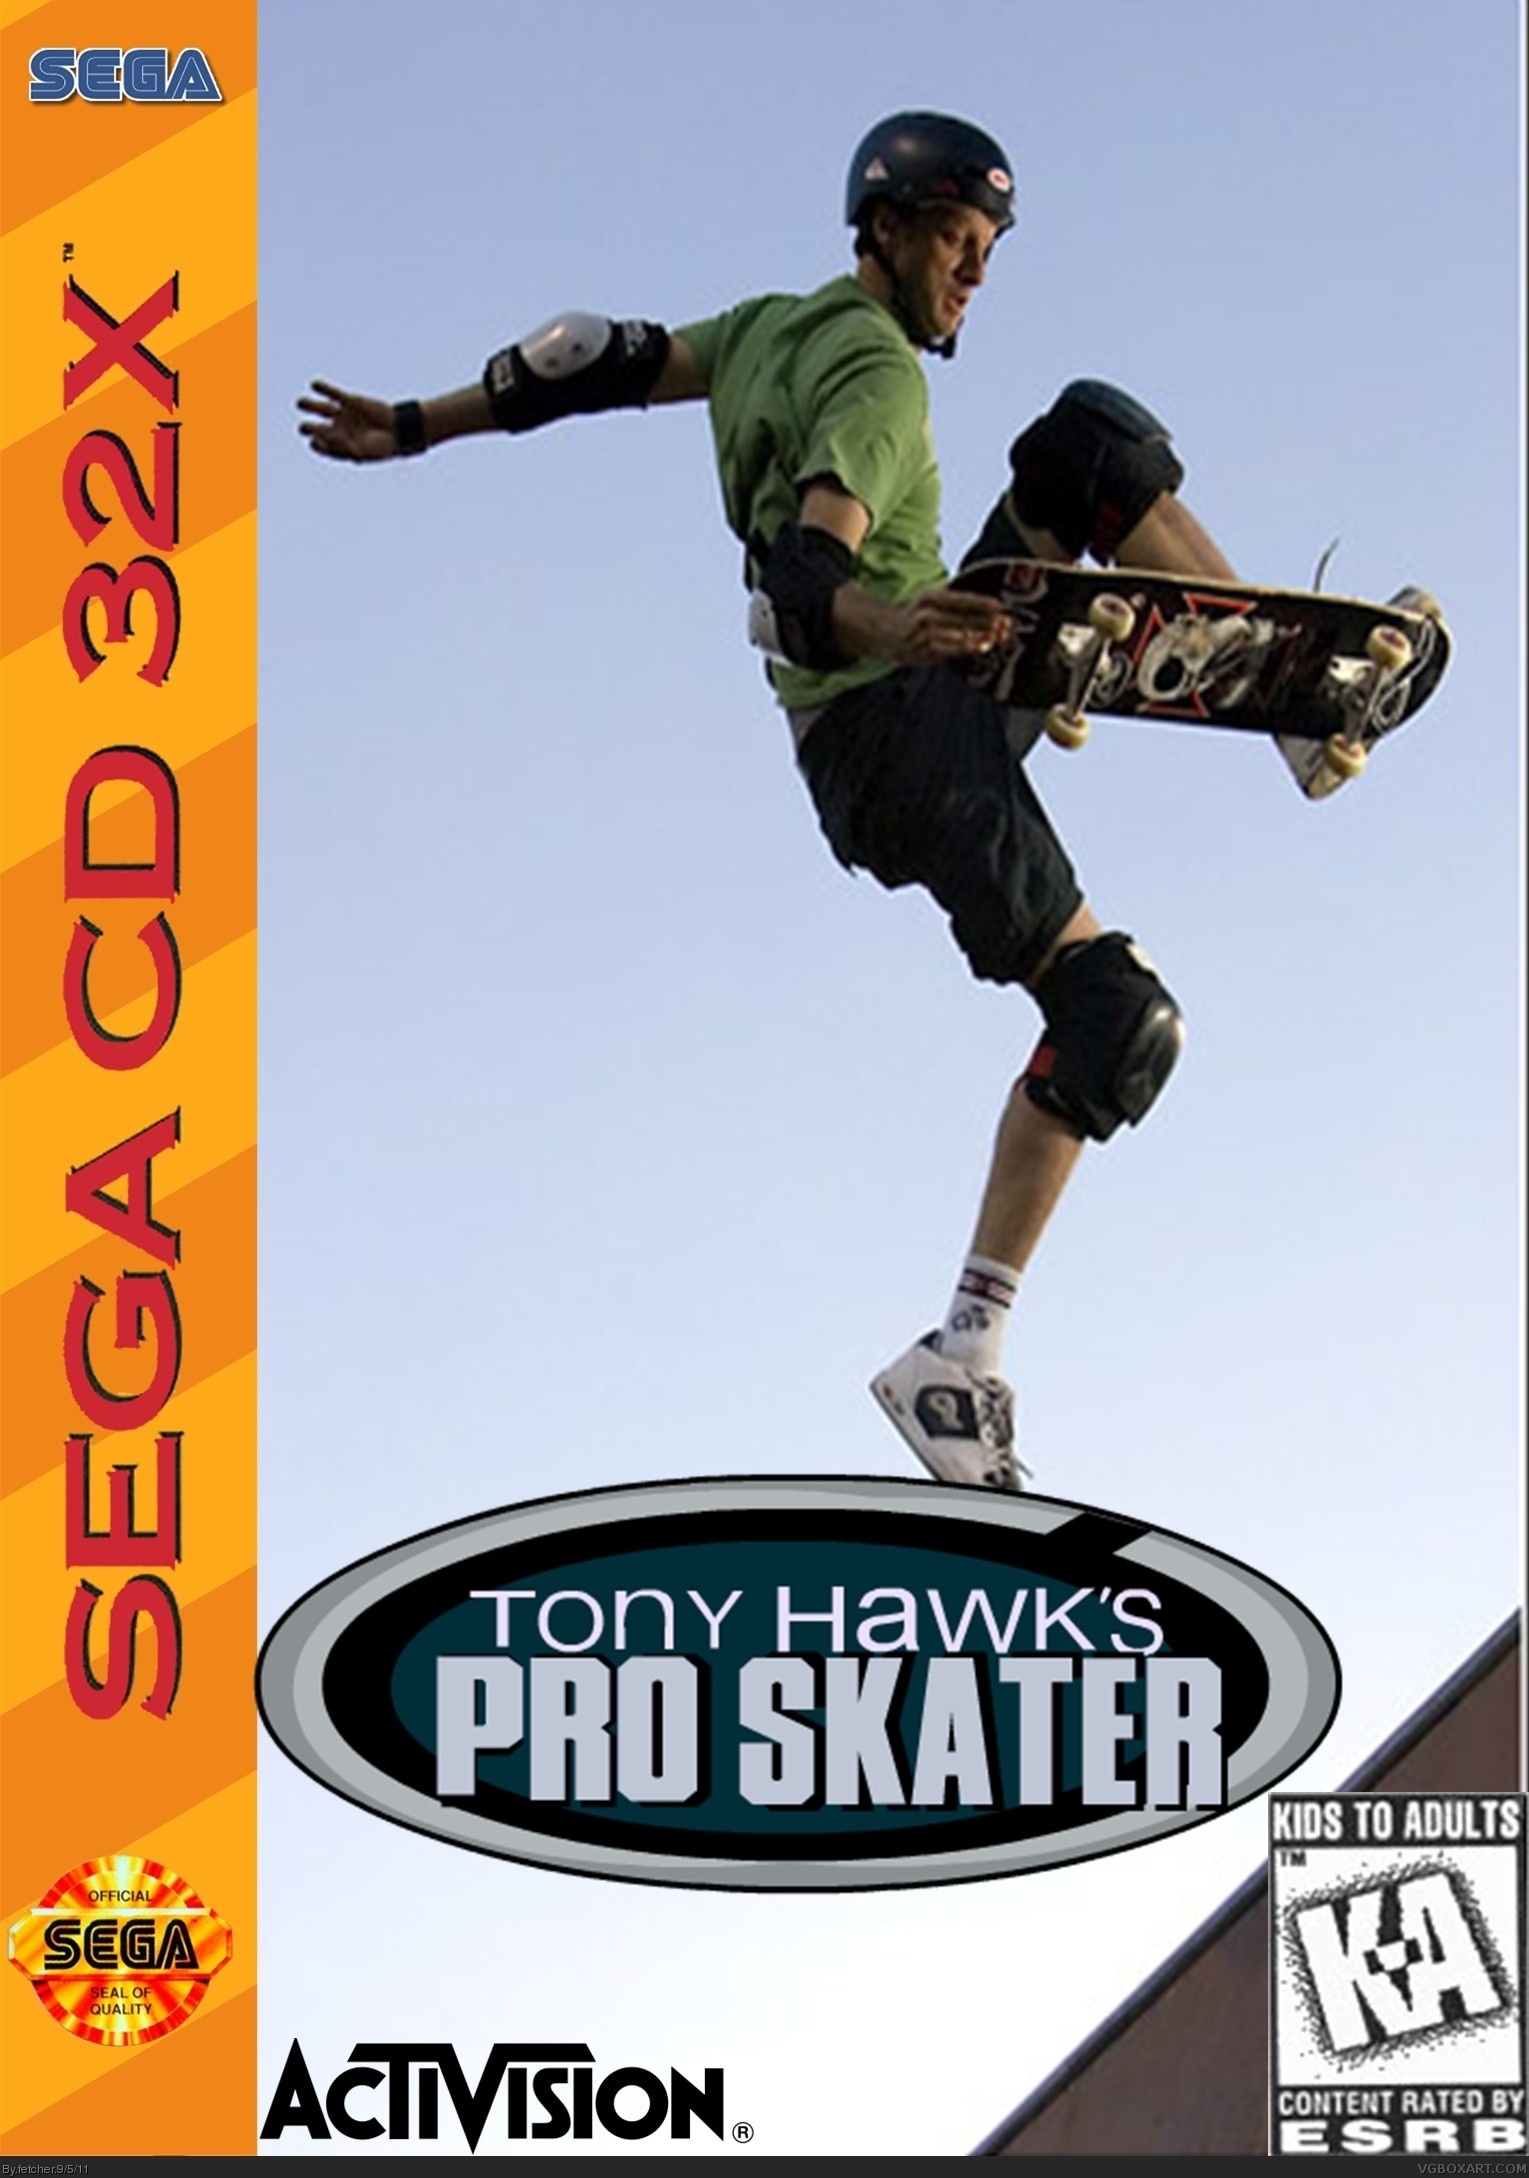 Tony Hawk's Pro Skater (32X) box cover